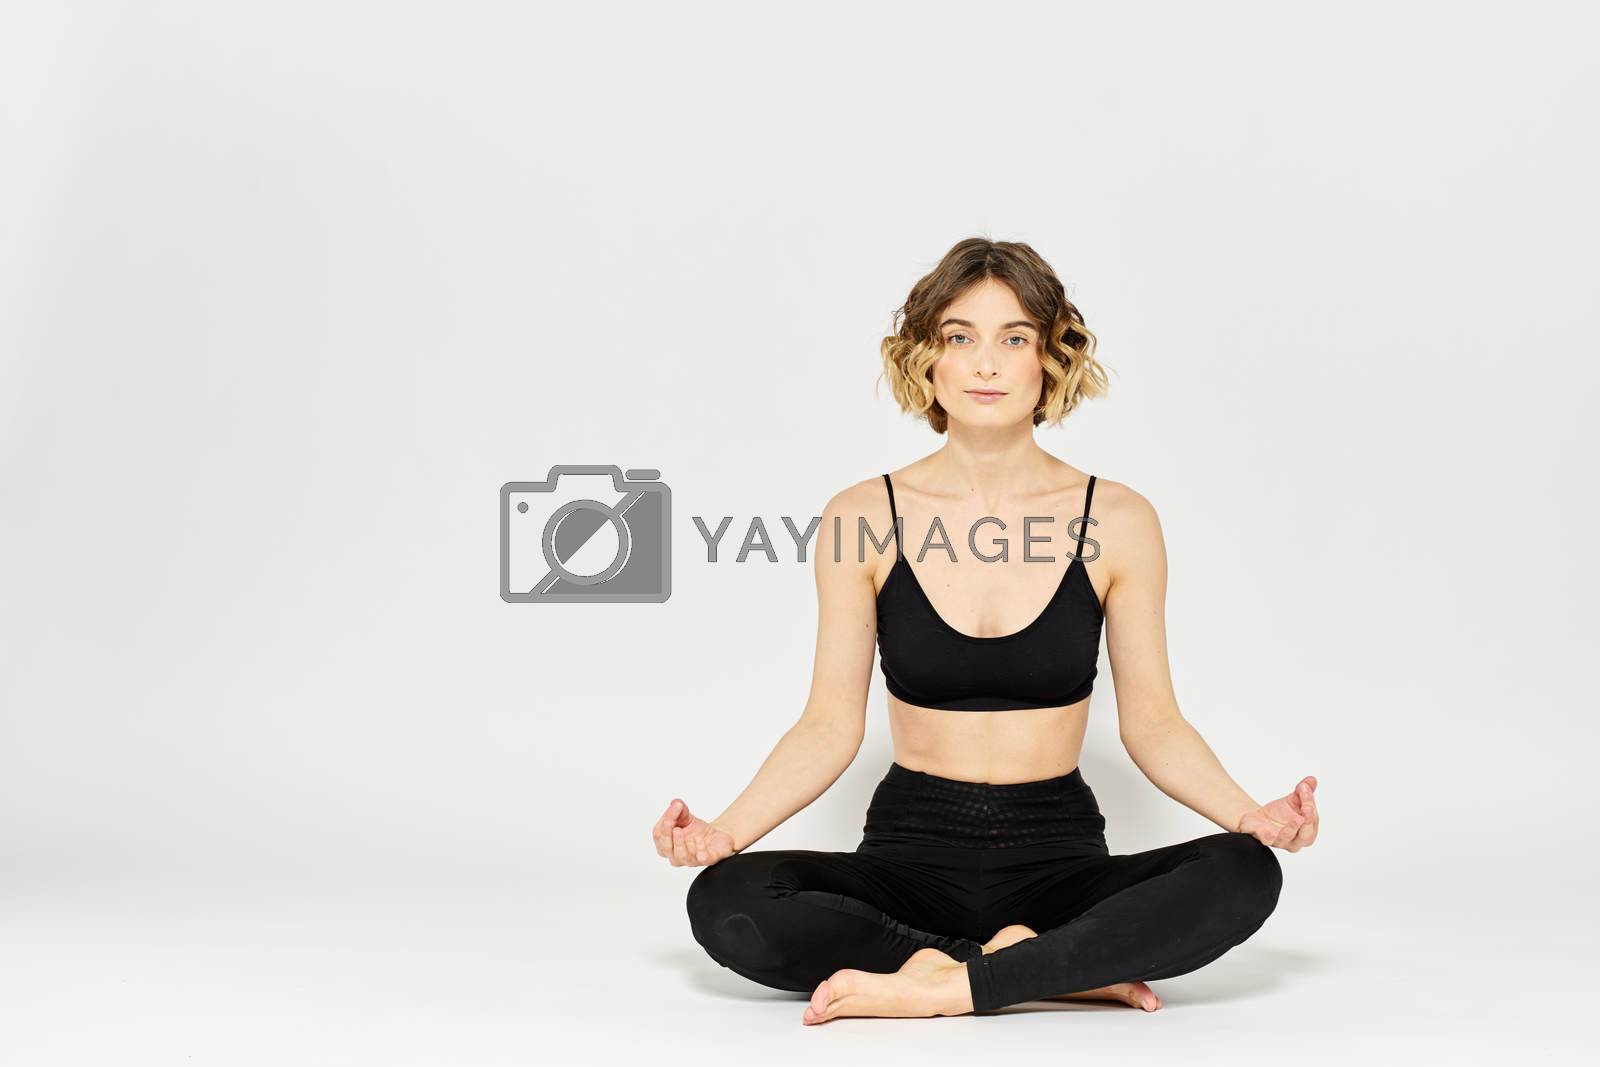 Yoga asana woman crossed legs meditation light background room. High quality photo